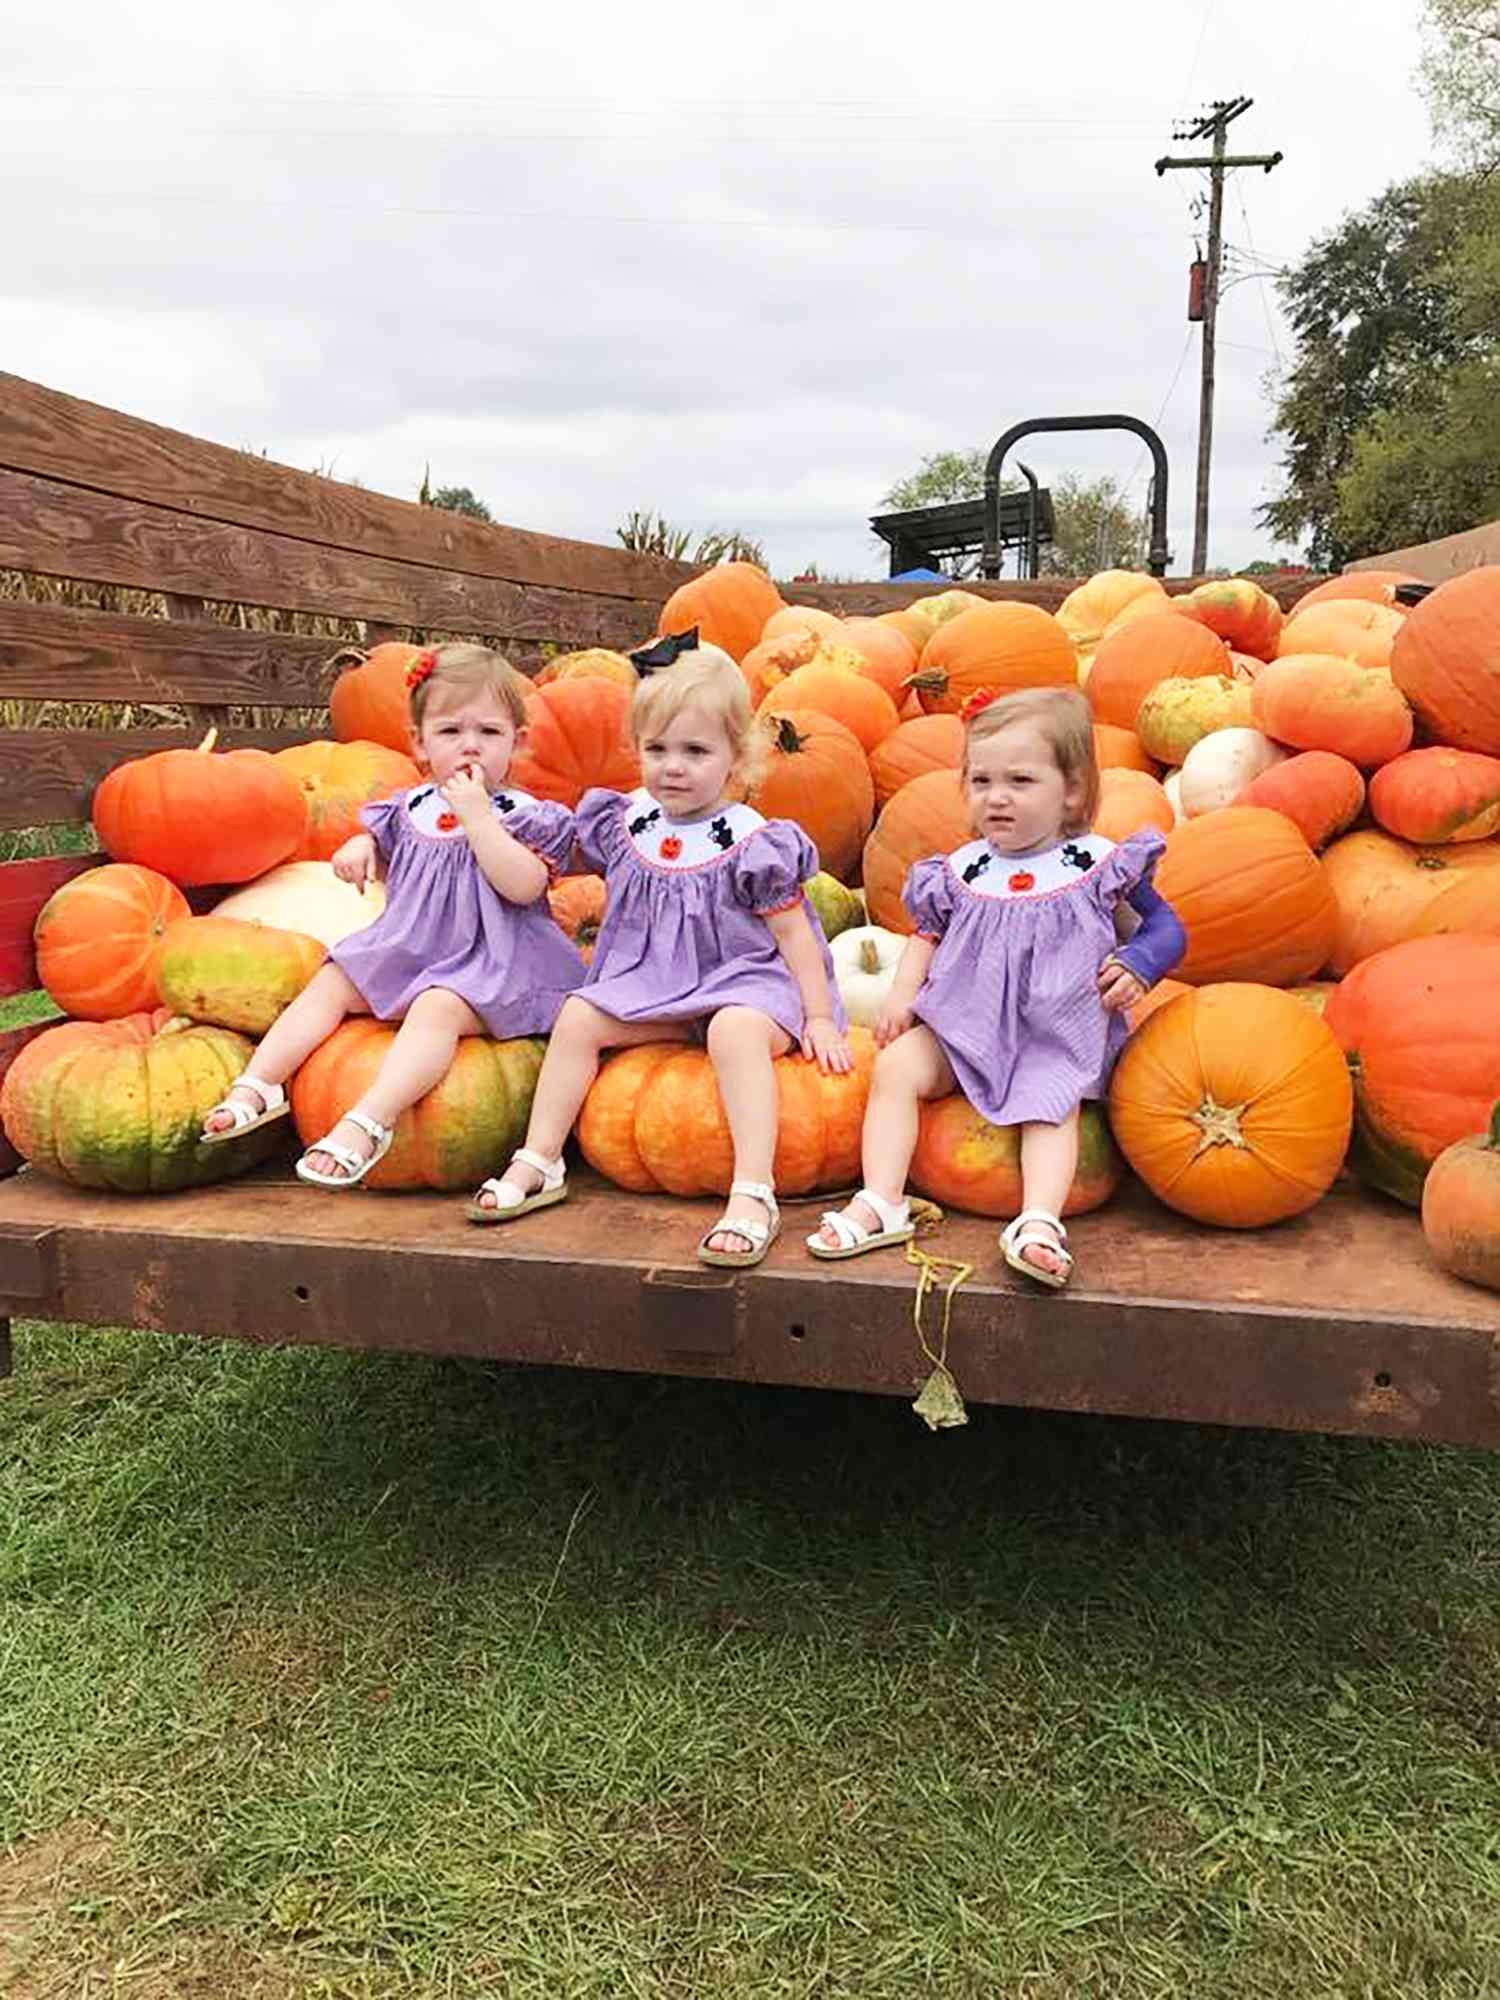 Kids Sitting on a Pumpkin Truck